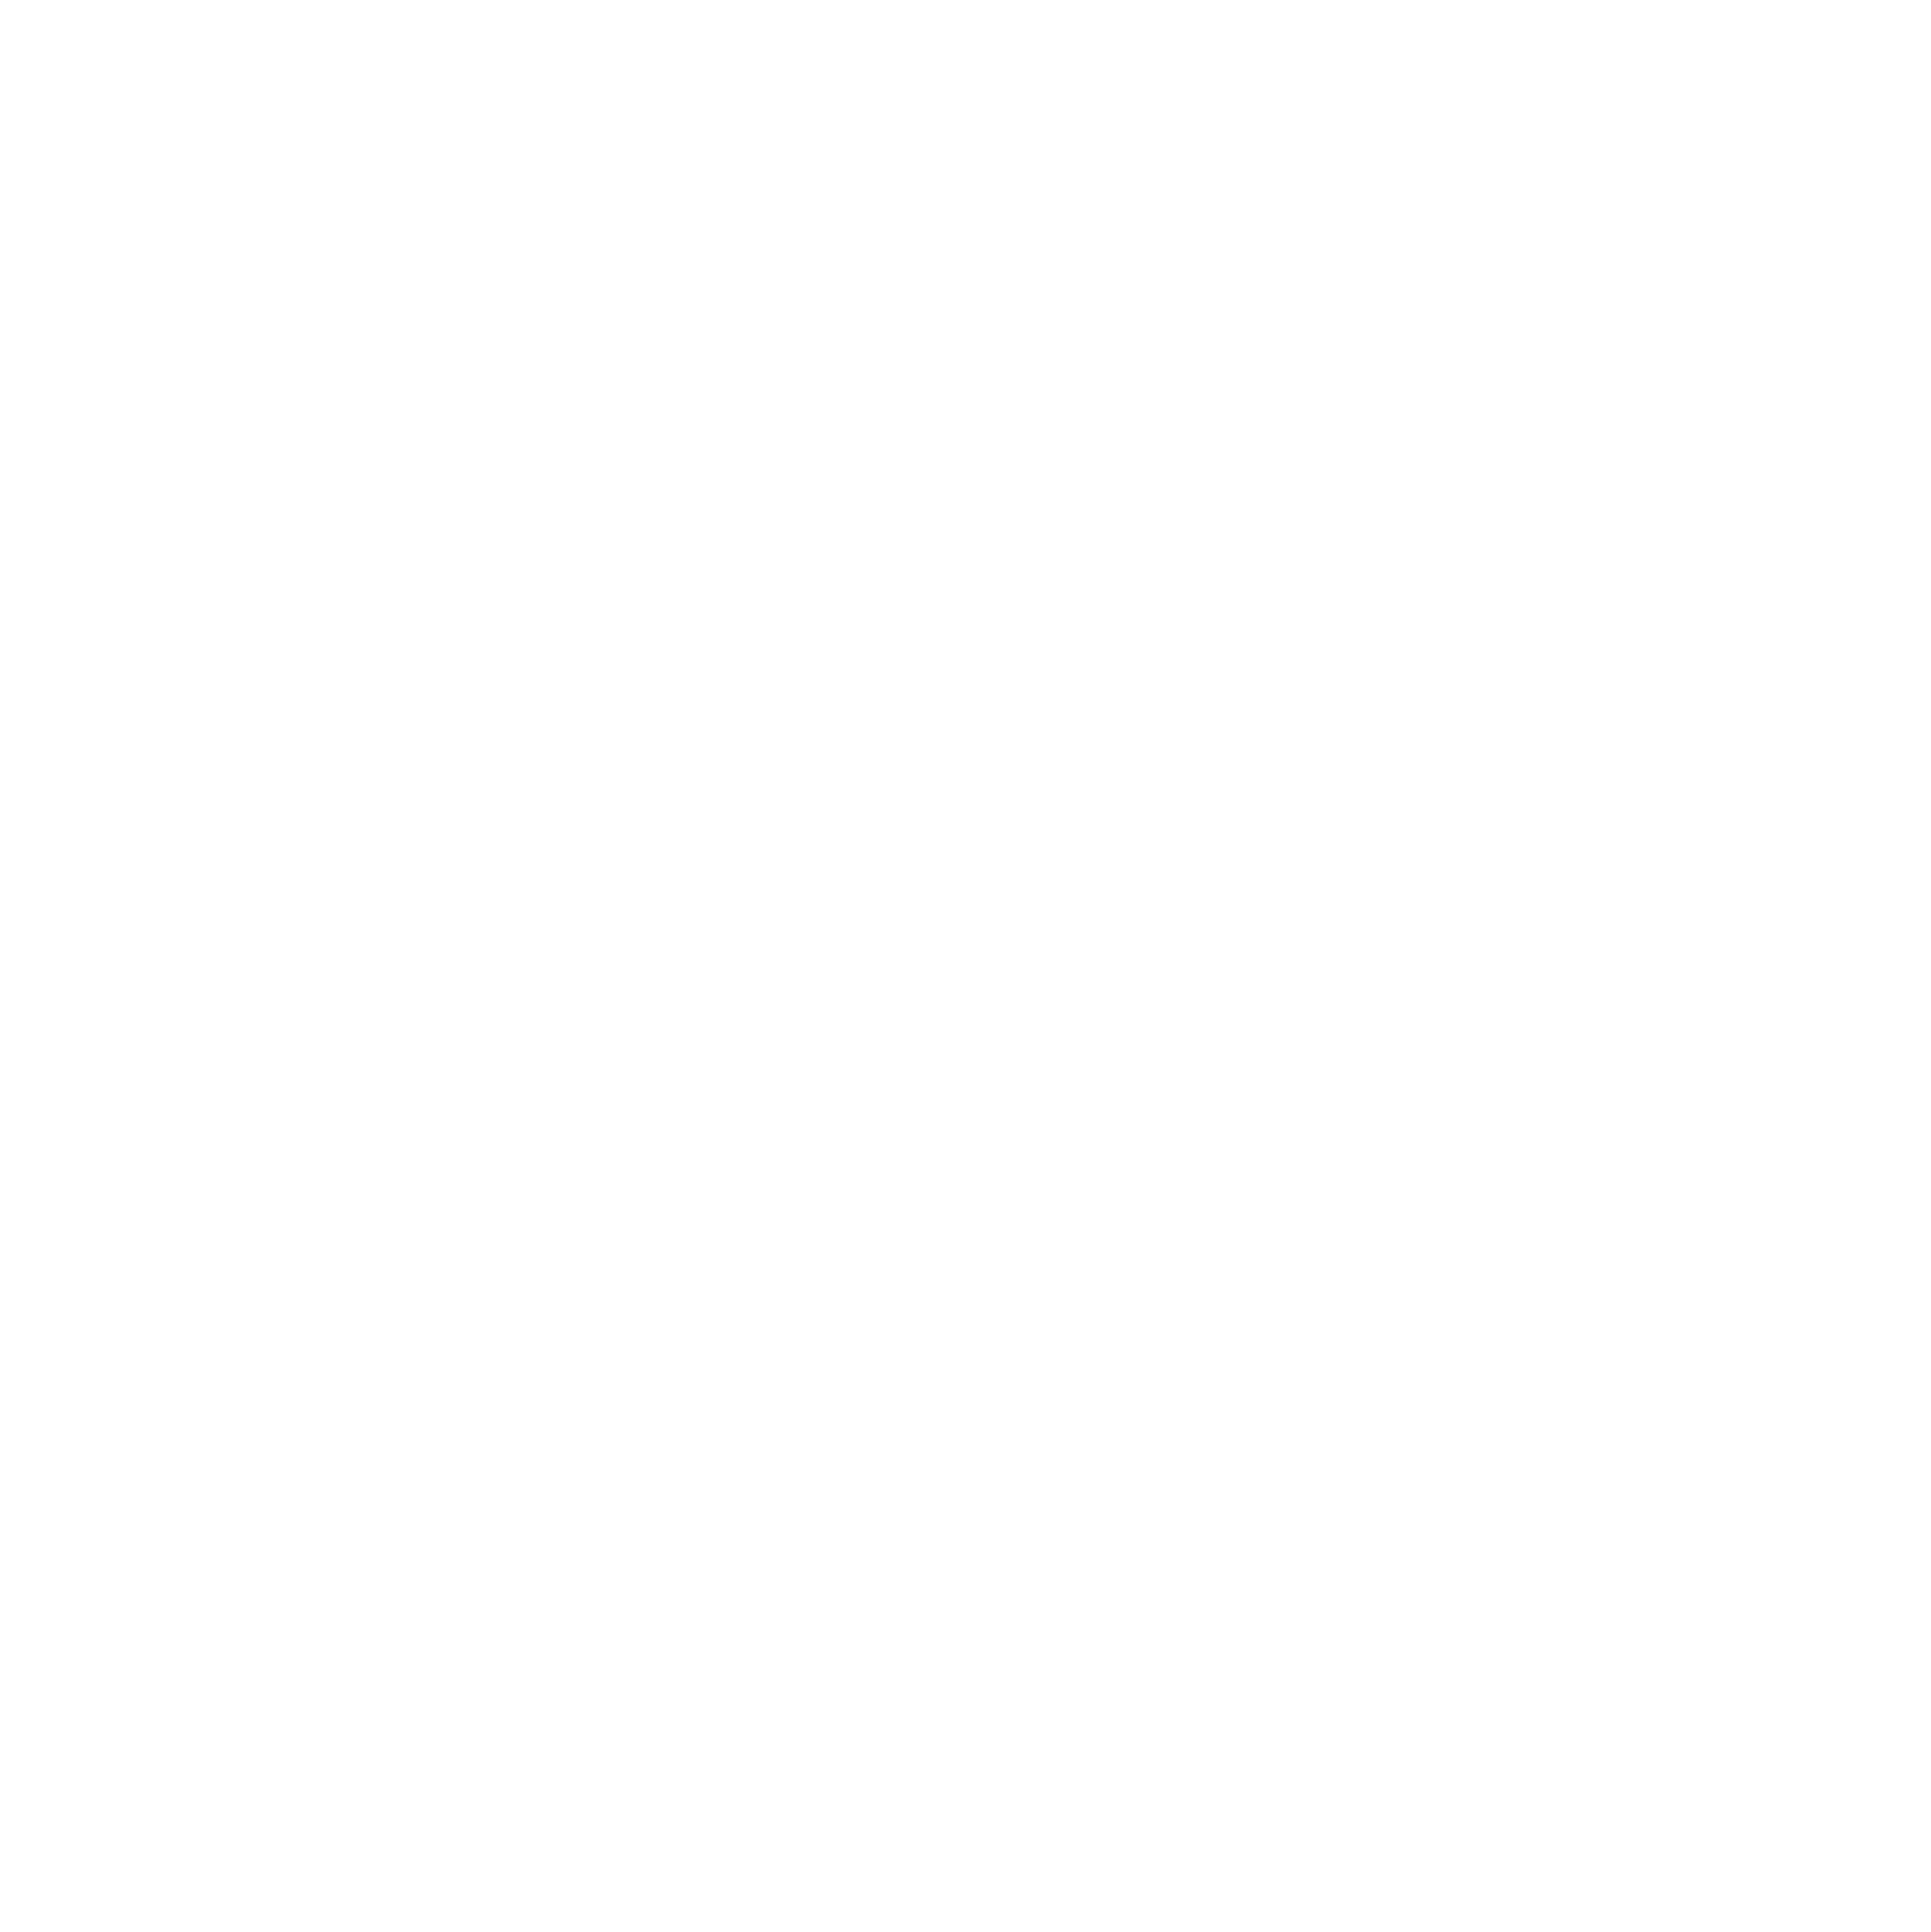 wifi pictogram